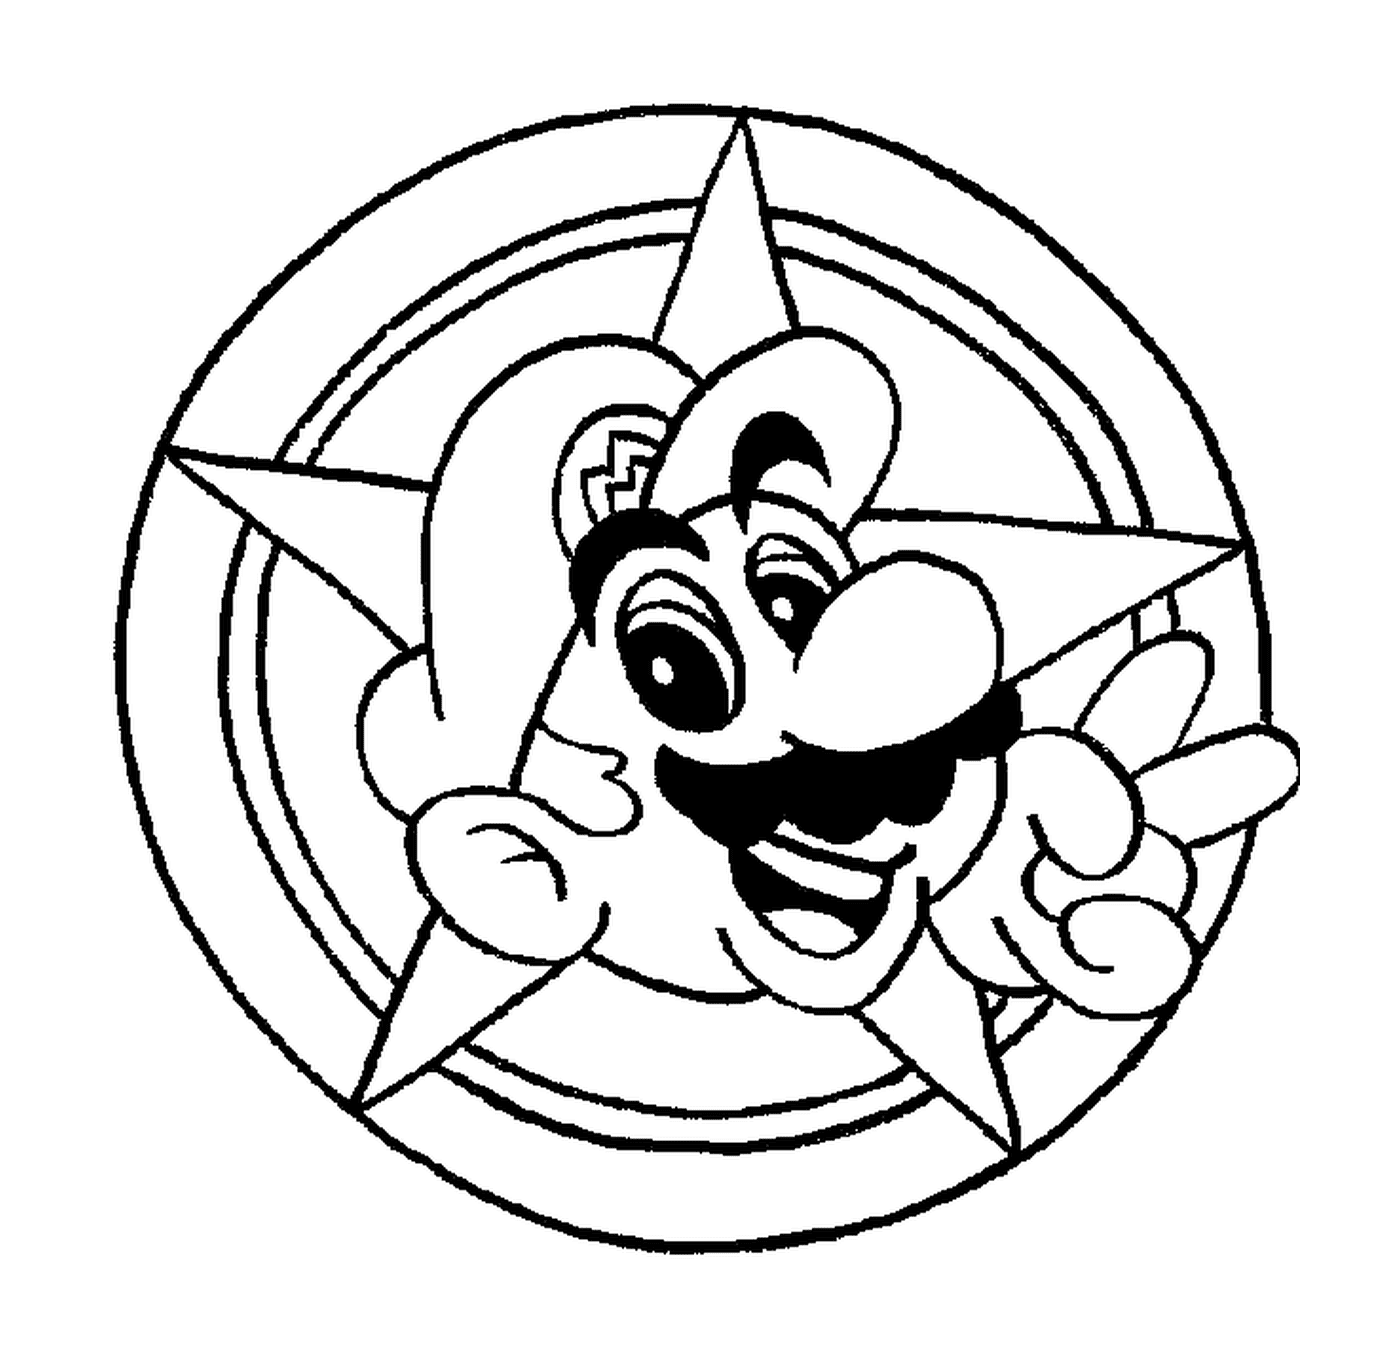  Mario's head in a circle 